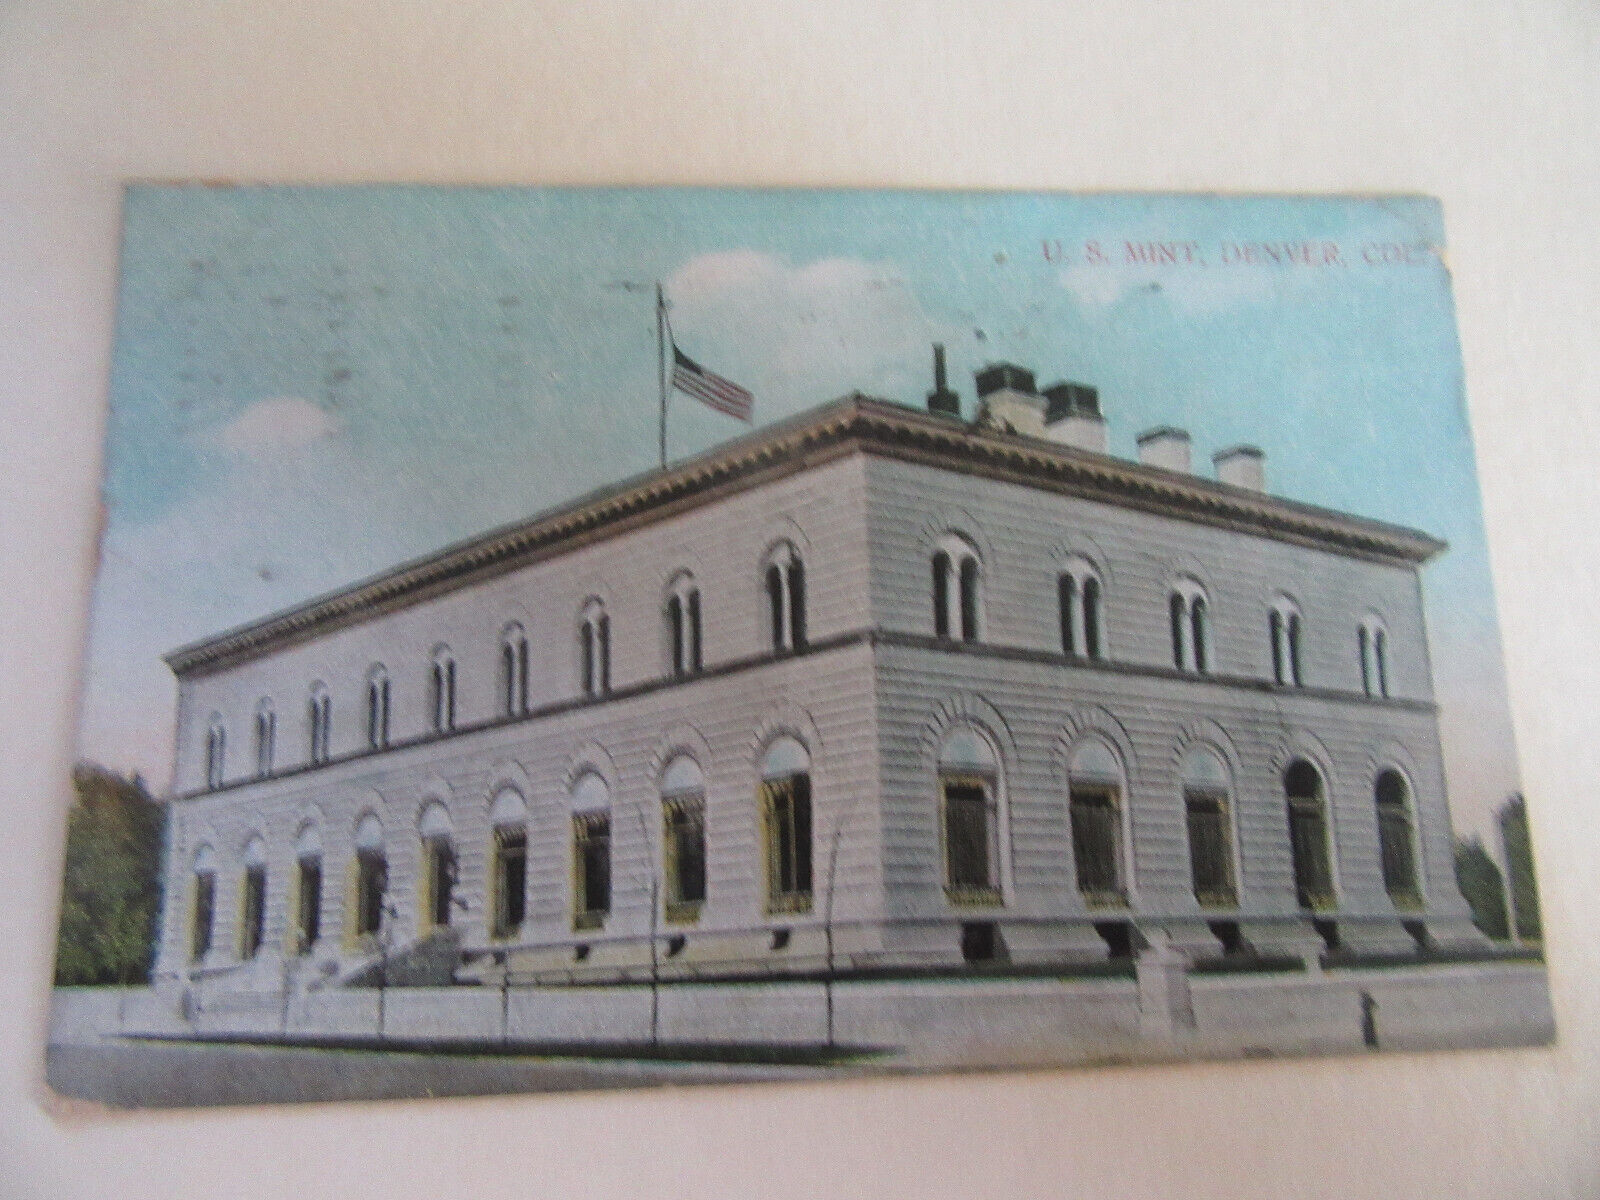 U.S. Mint Building In Denver Colorado 1909 Postcard With Denver Cancel 4-6-1909